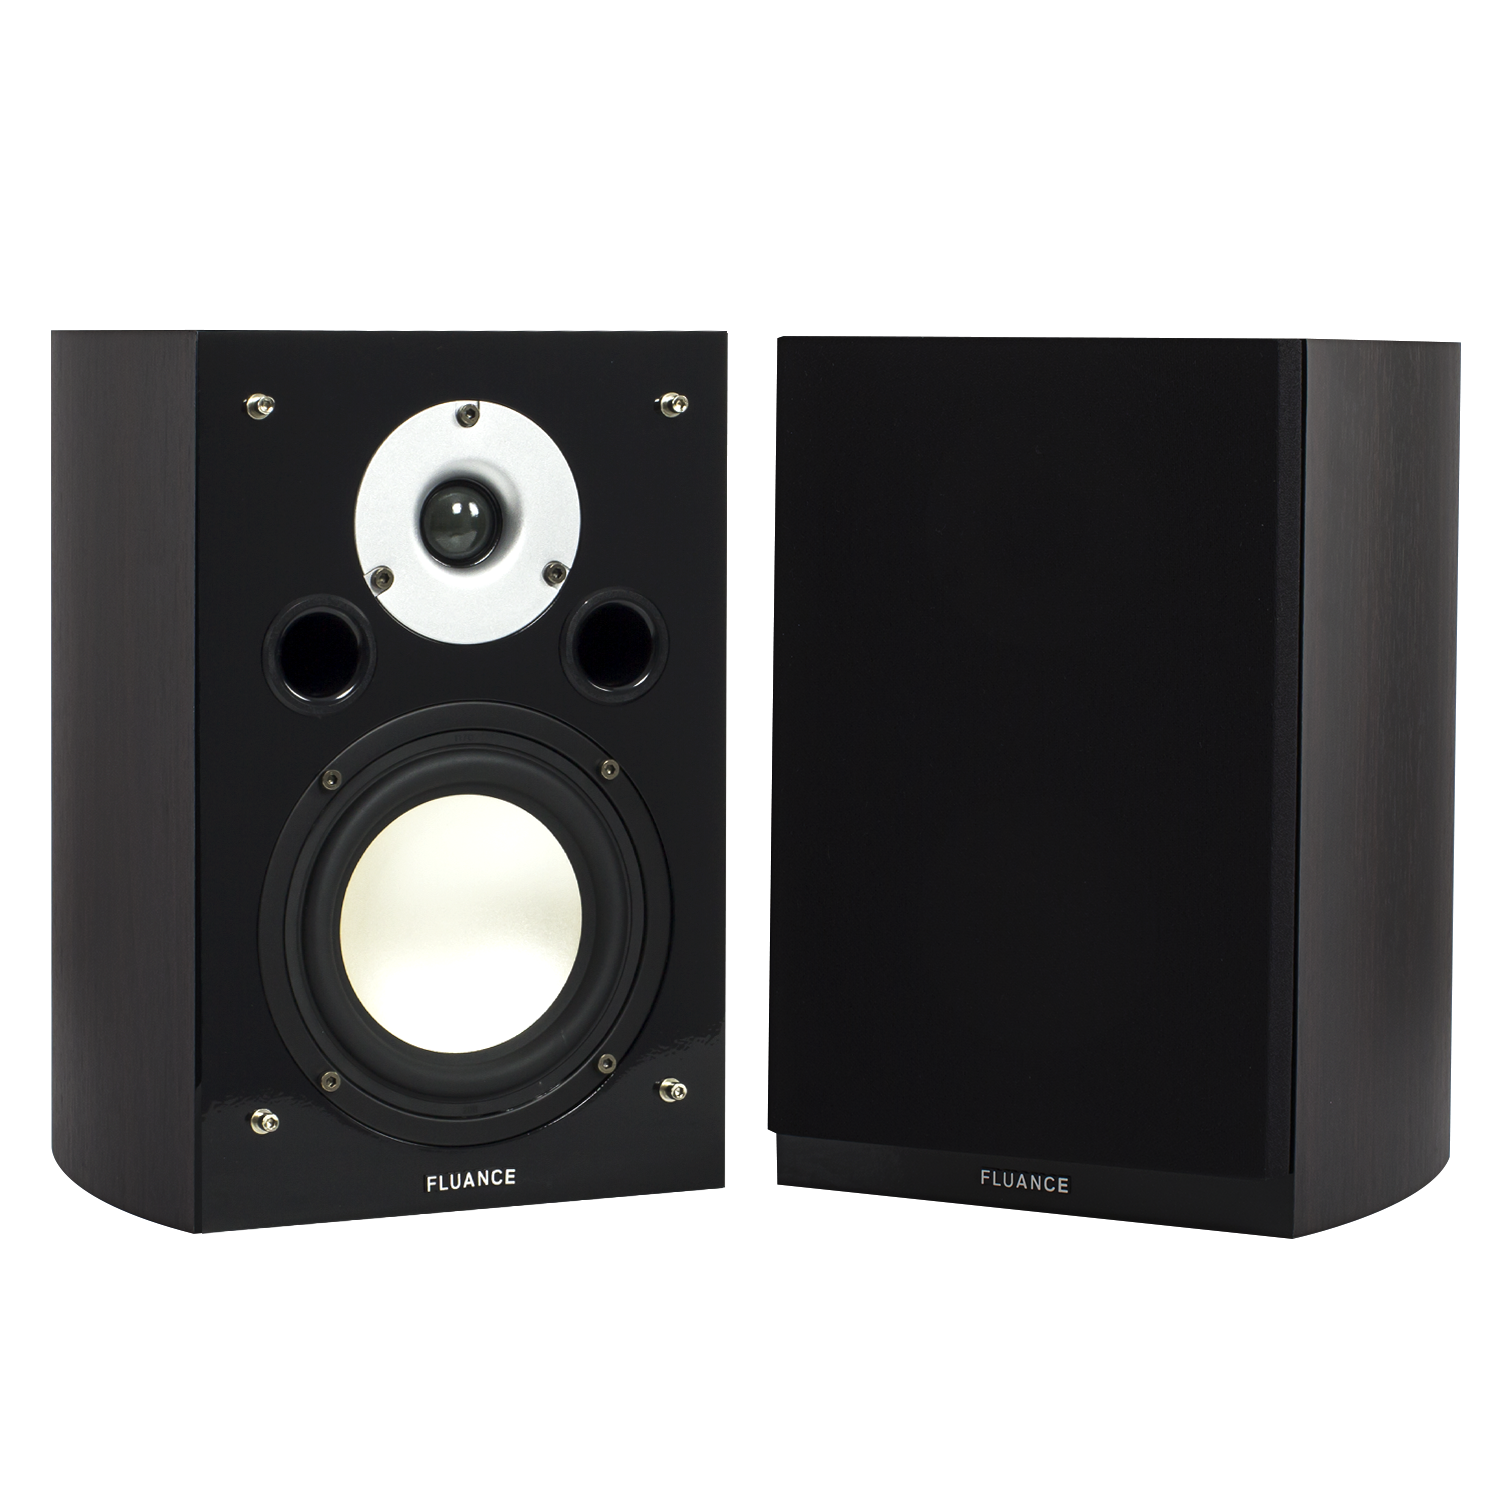 XL7S High Performance Two-way Bookshelf Surround Sound Speakers - Dark Walnut